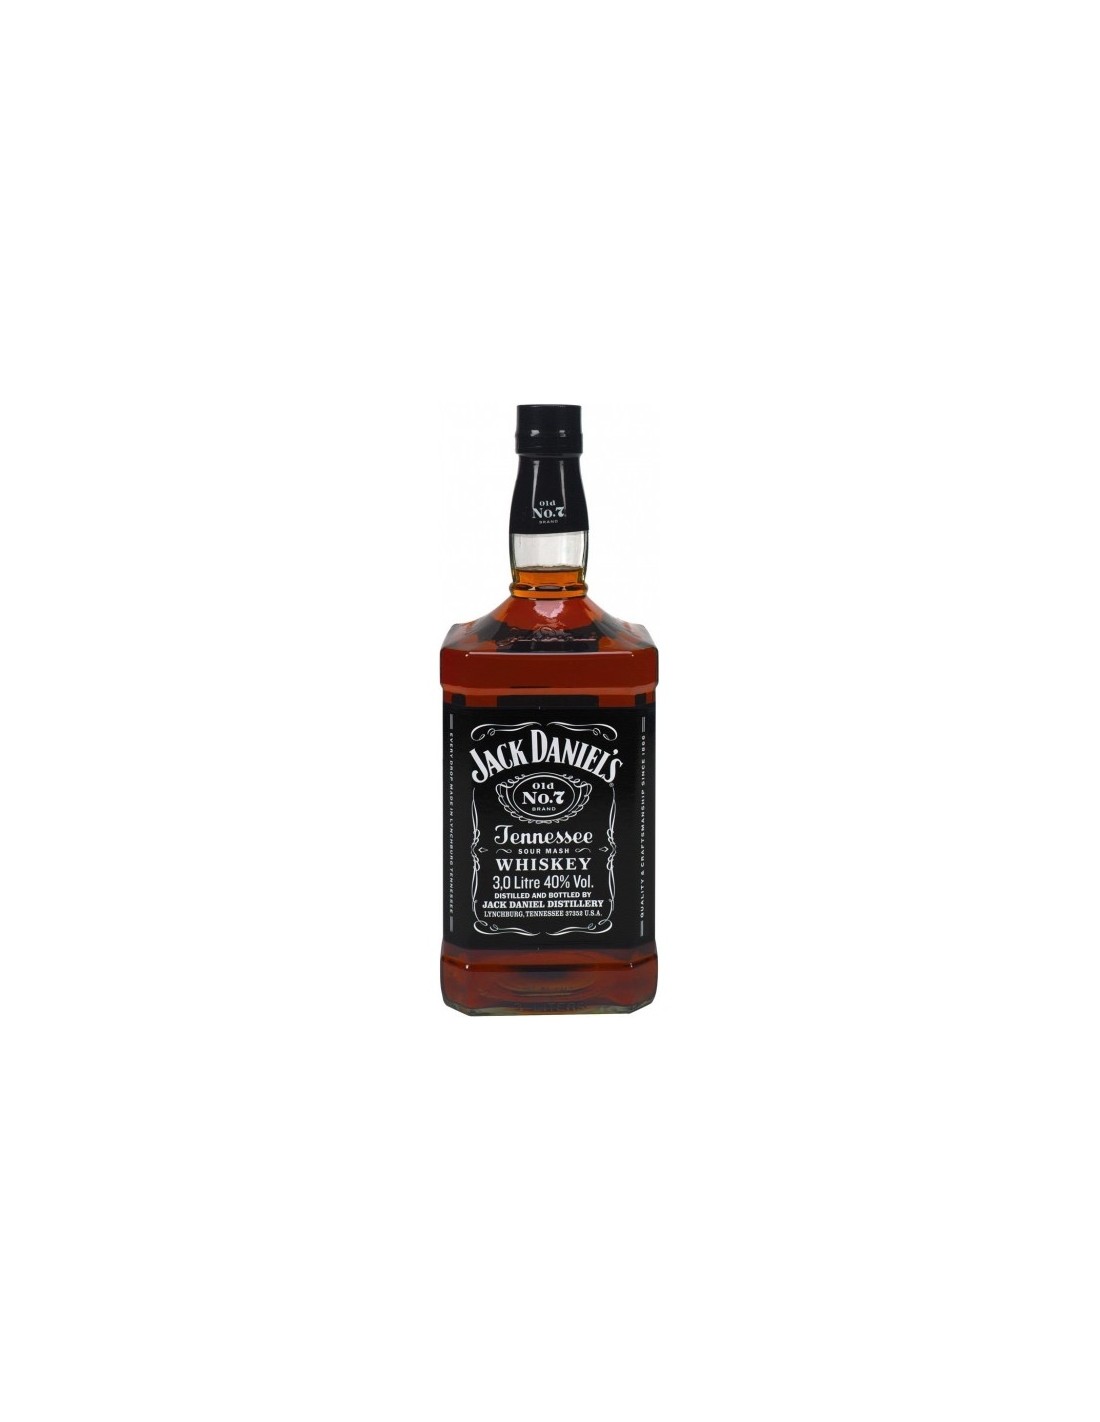 Whisky Jack Daniel’s, 3L, 40% alc., SUA alcooldiscount.ro